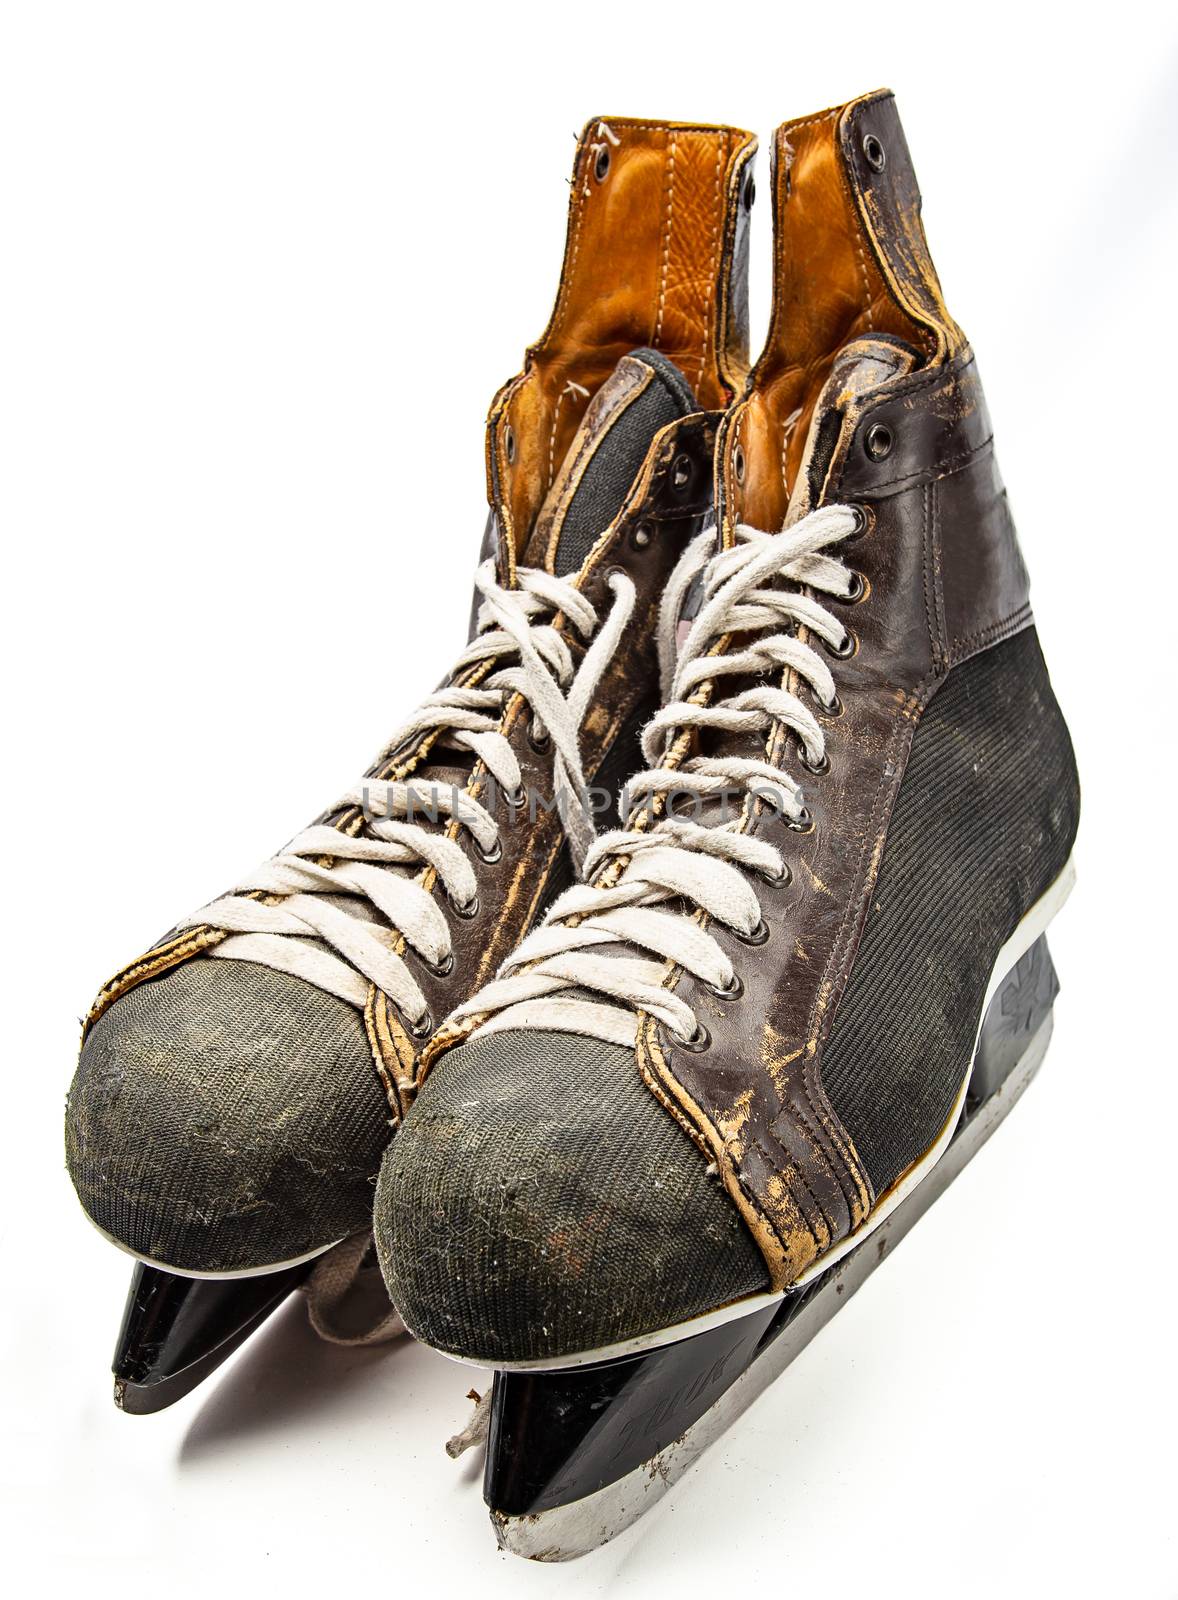 Vintage leather skate by mypstudio